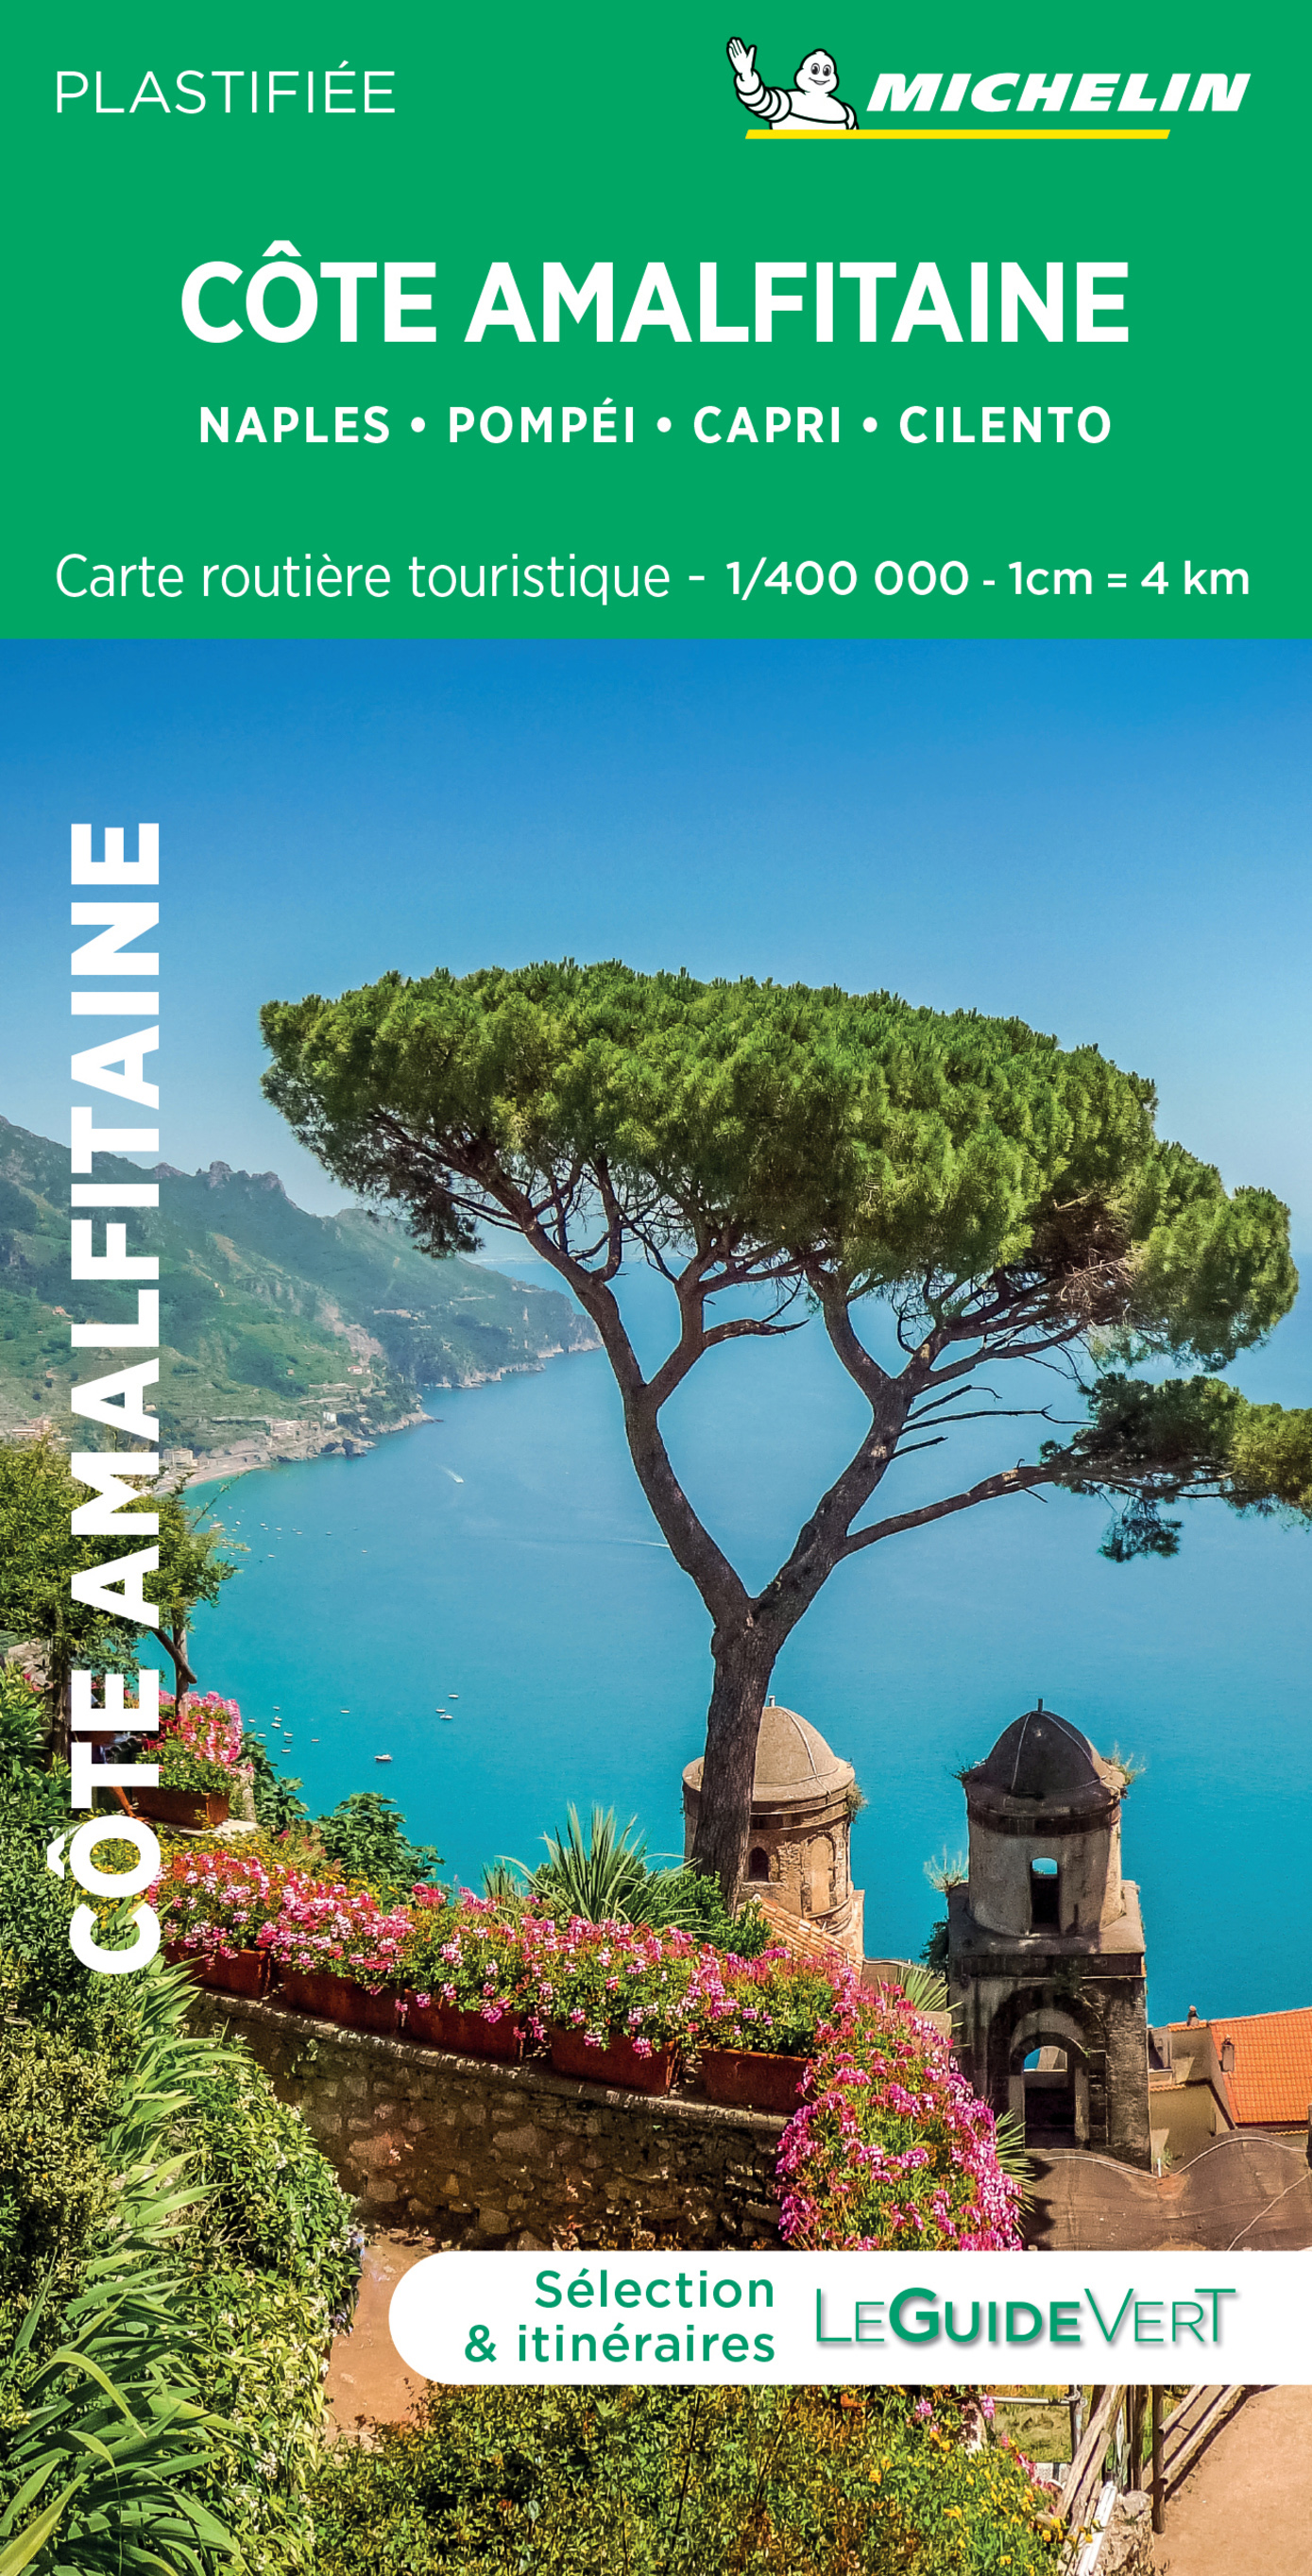 Online bestellen: Wegenkaart - landkaart Côte amalfitaine Amalfi-kust Napels | Michelin